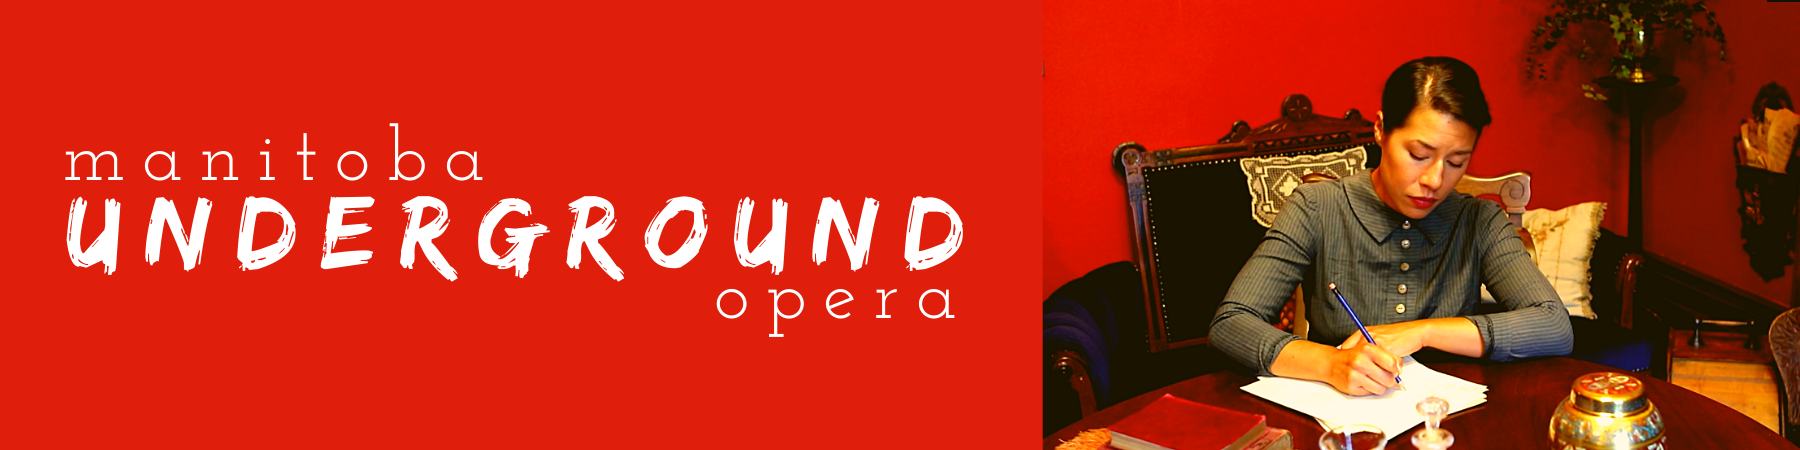 Manitoba Underground Opera logo